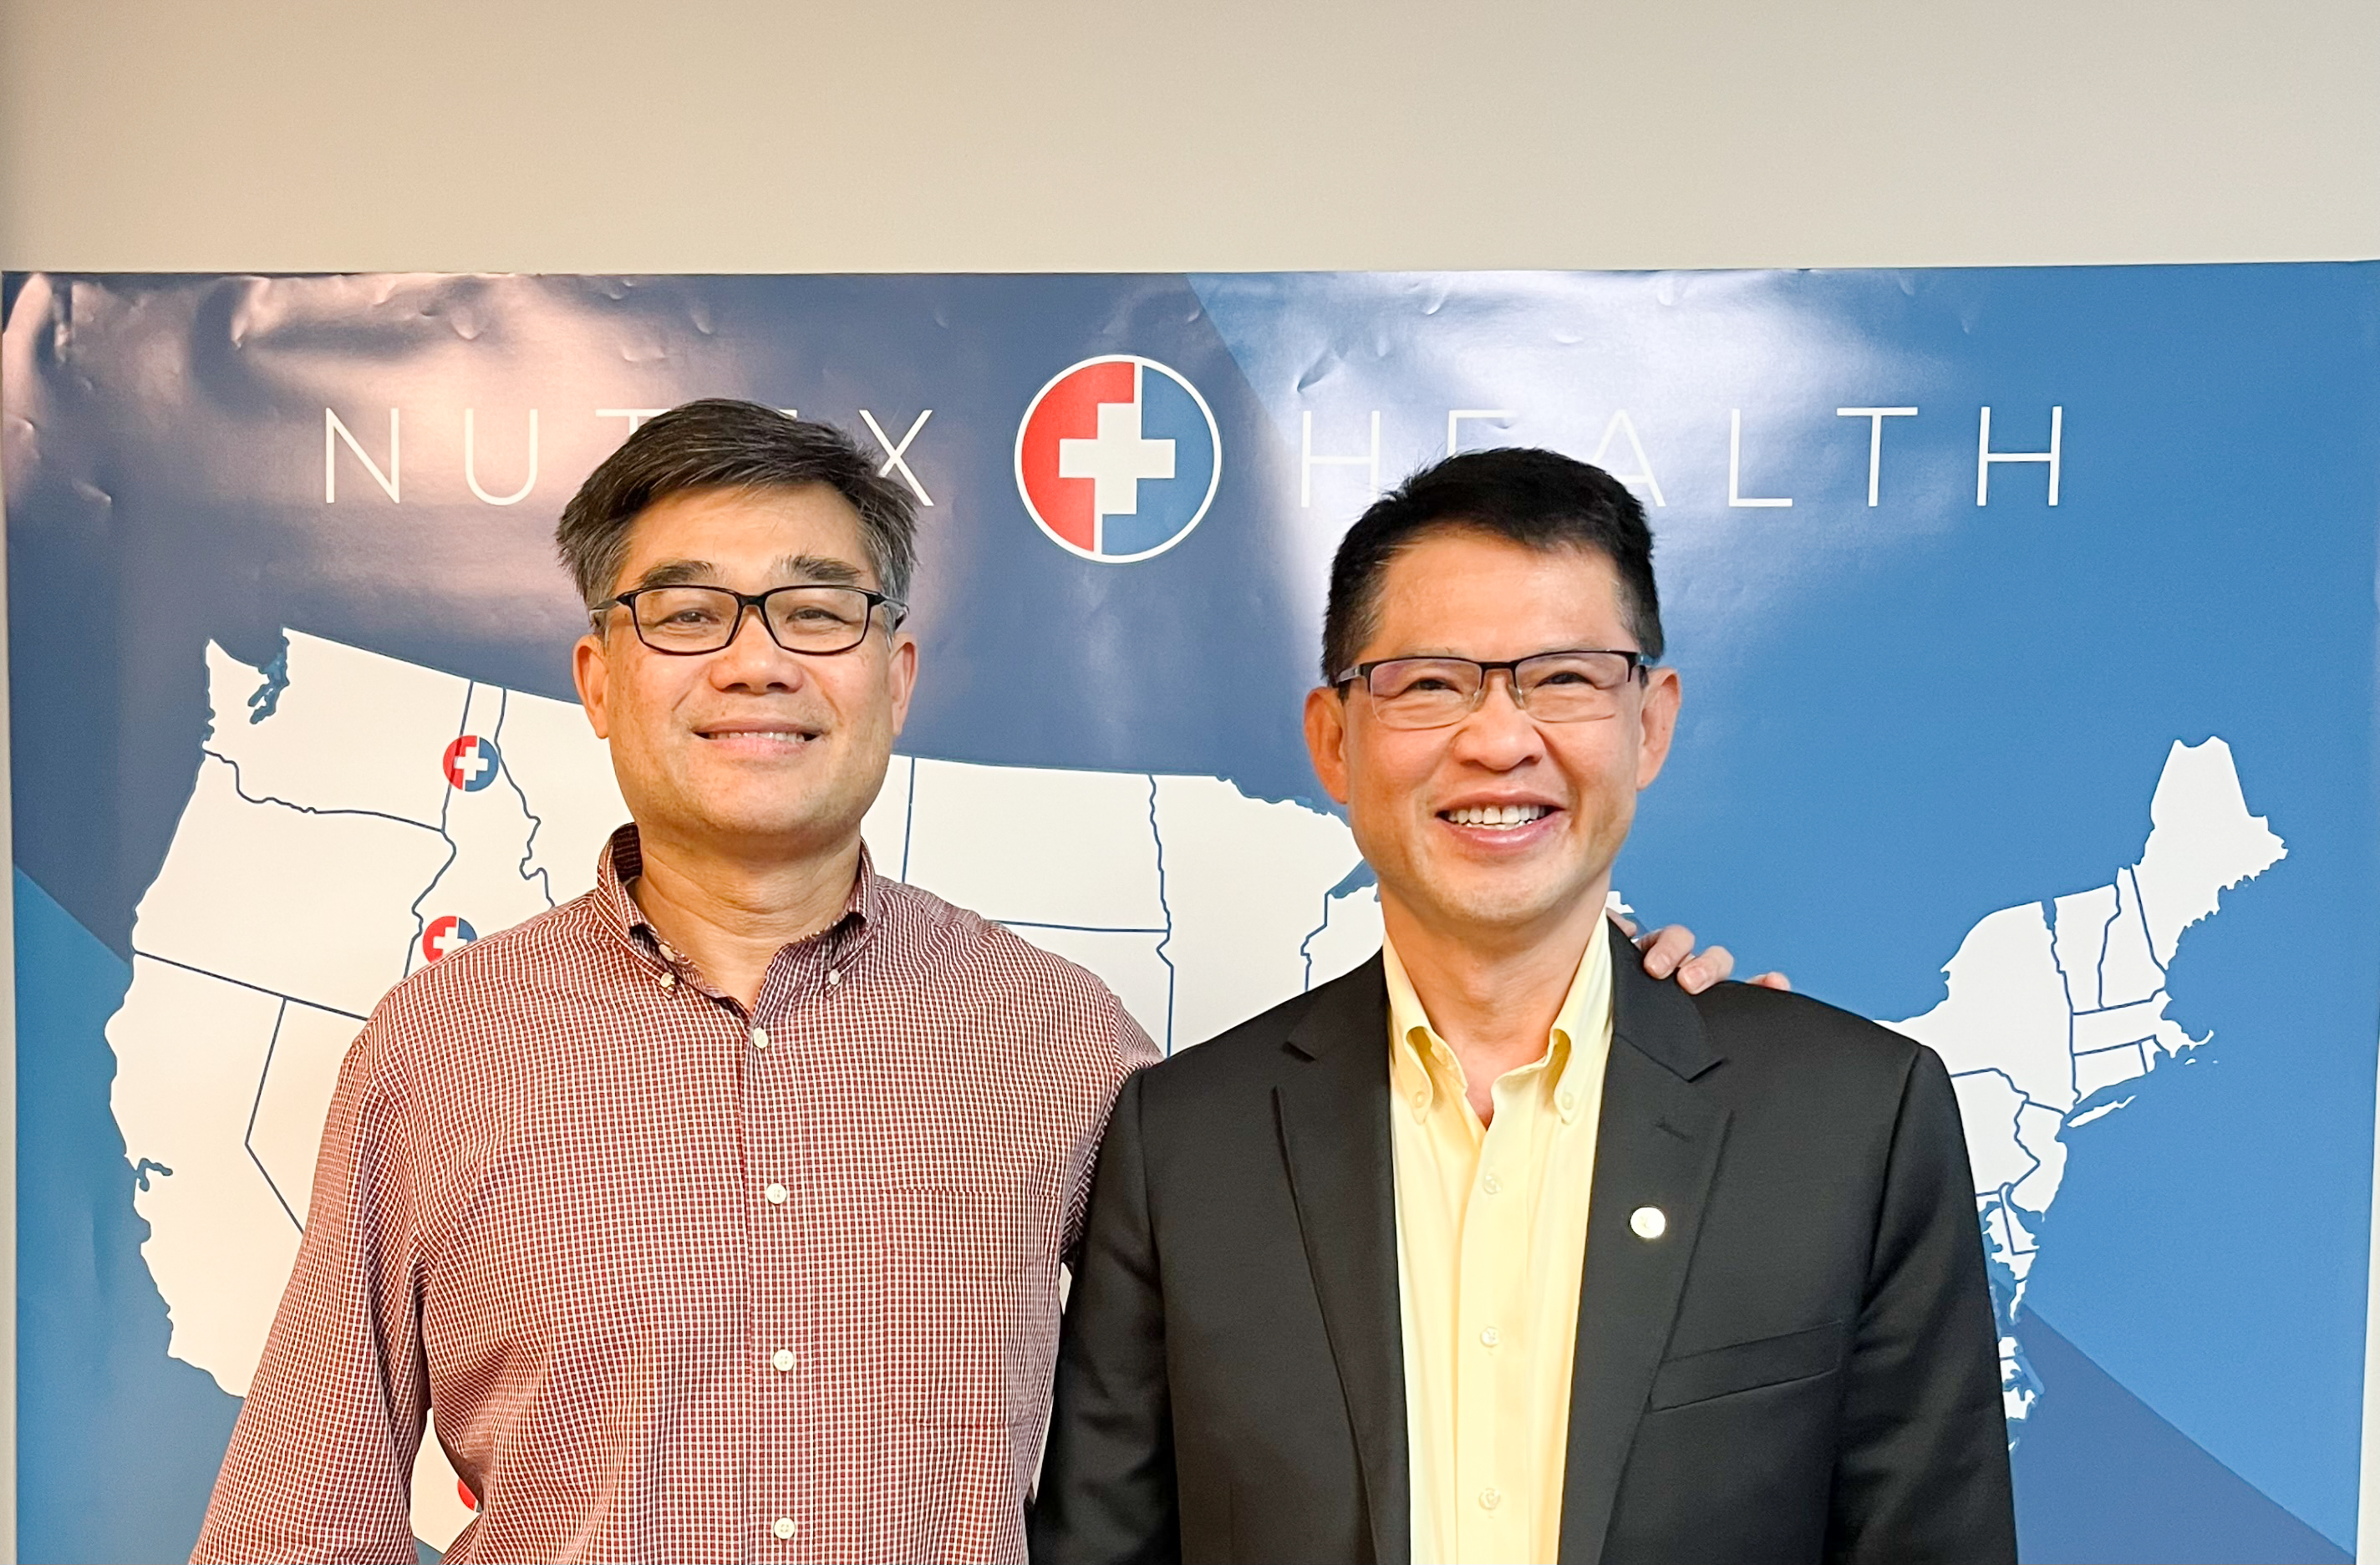 CEO Nutex  Health Tom Vo with CEO VinBrain Steven Truong